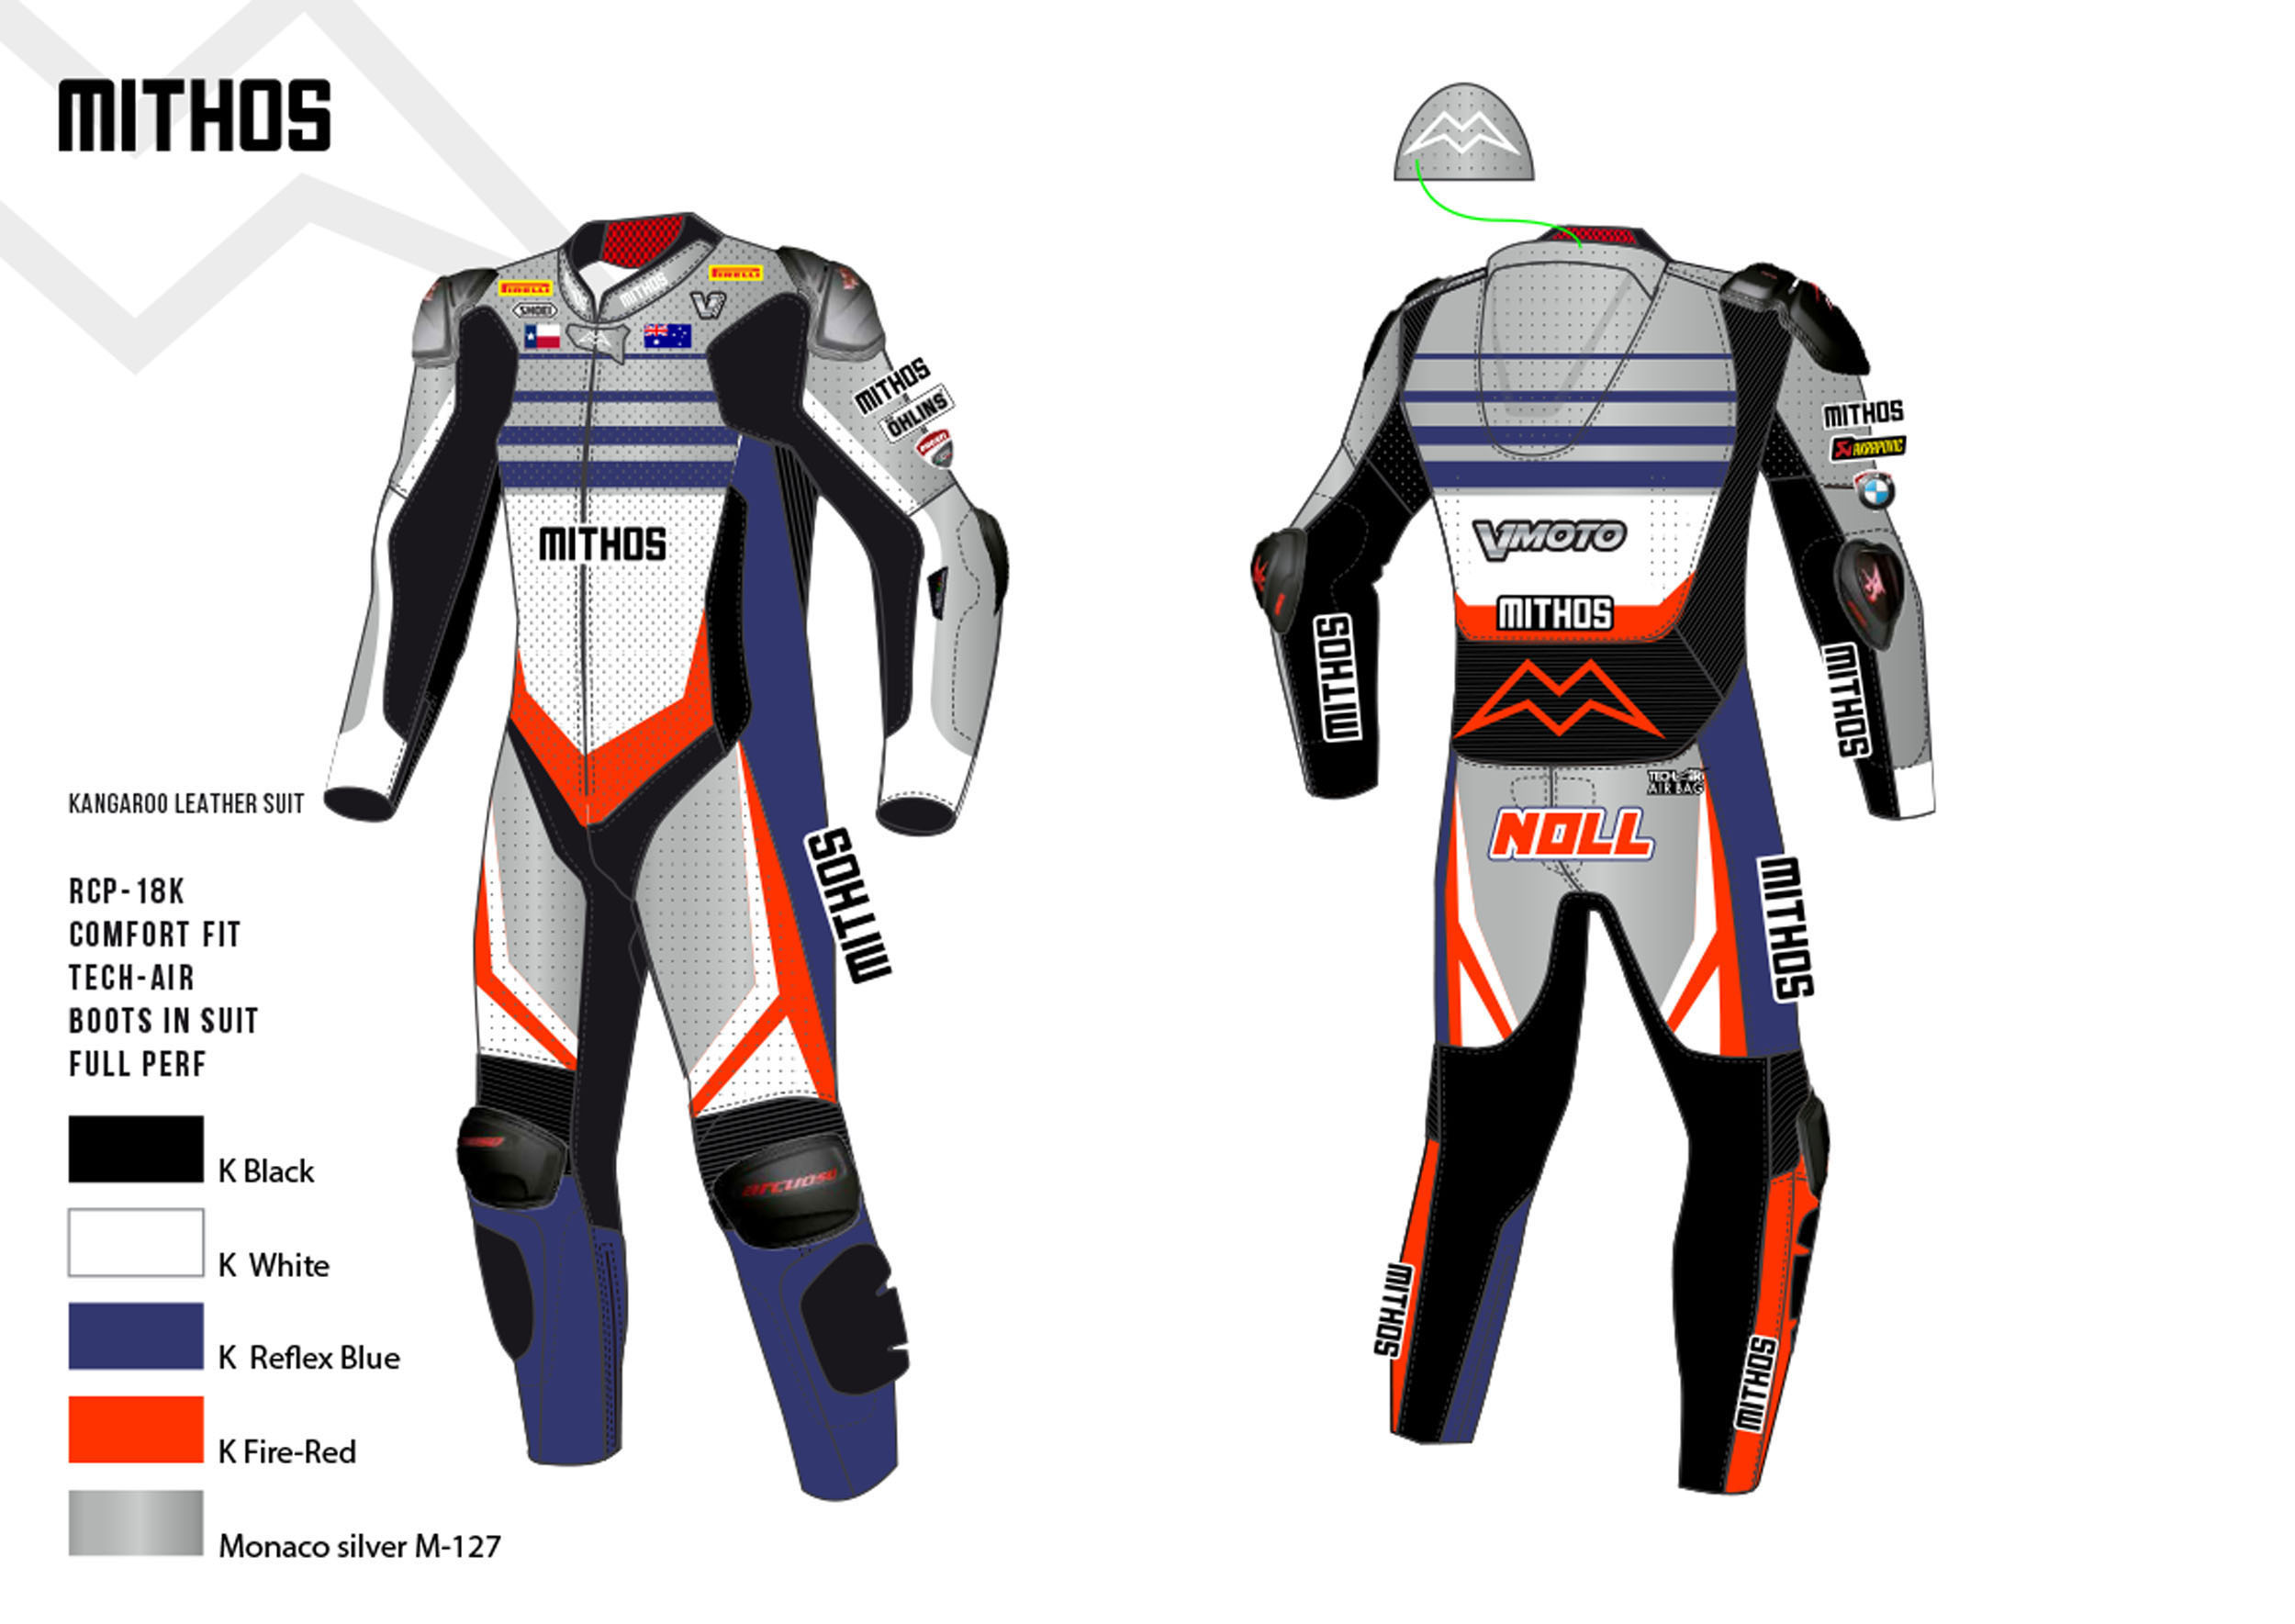 Mithos - Kangaroo Leather Suit - Racing Fit Design